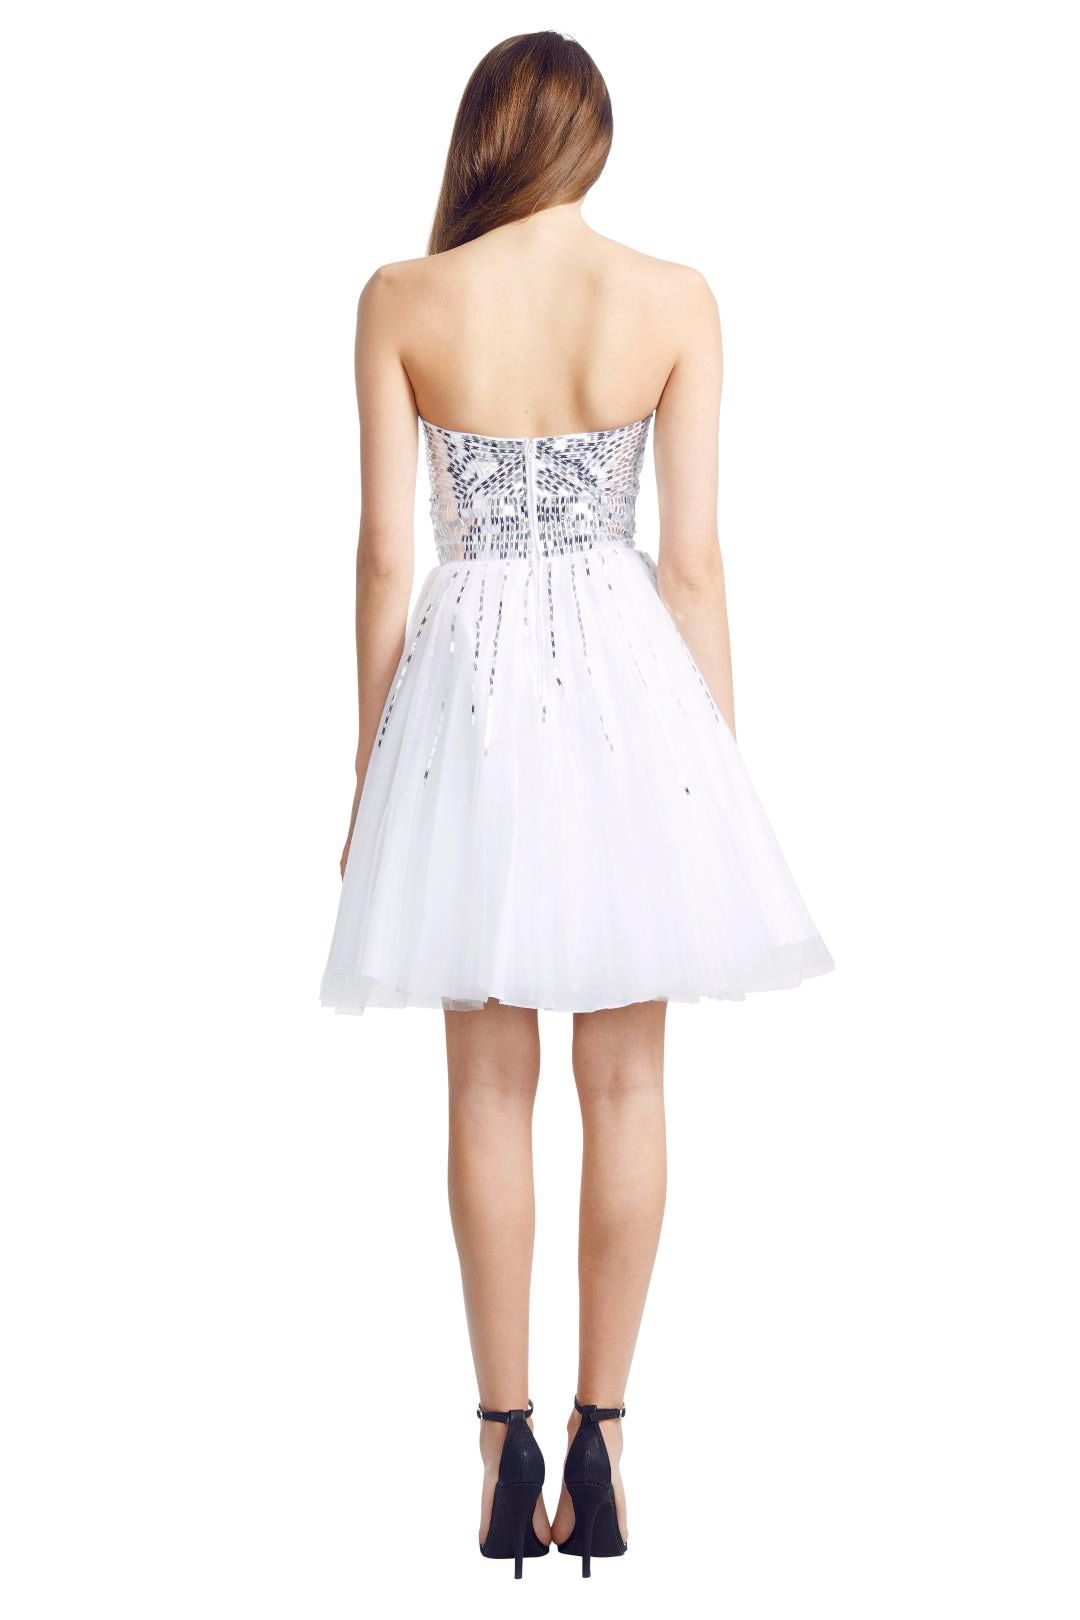 Grace and Hart - Moulin Dress - White - Back